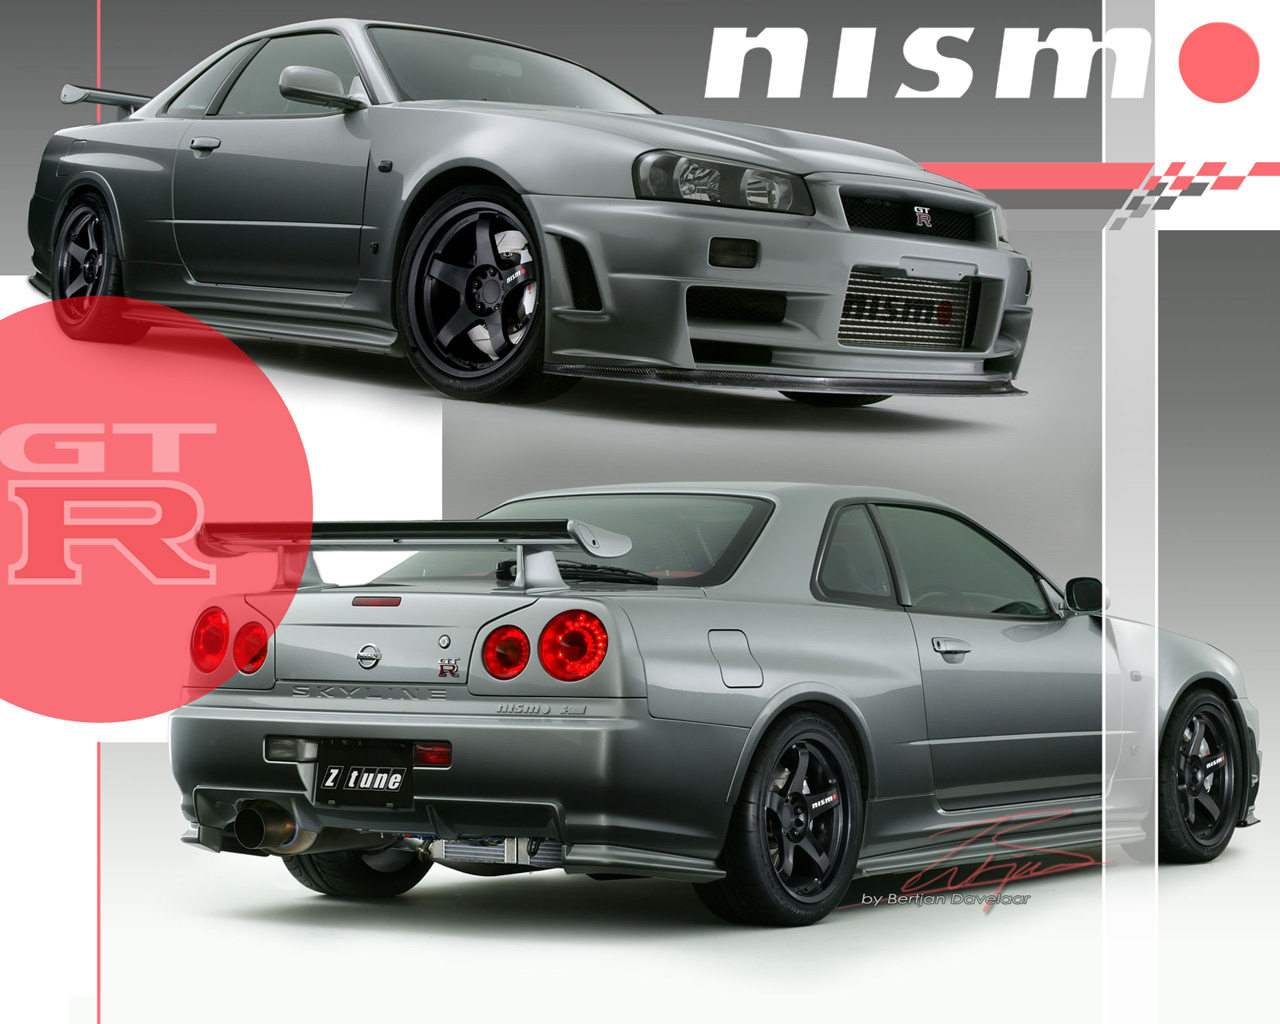 Nissan Skyline R34 Gtr Wallpaper